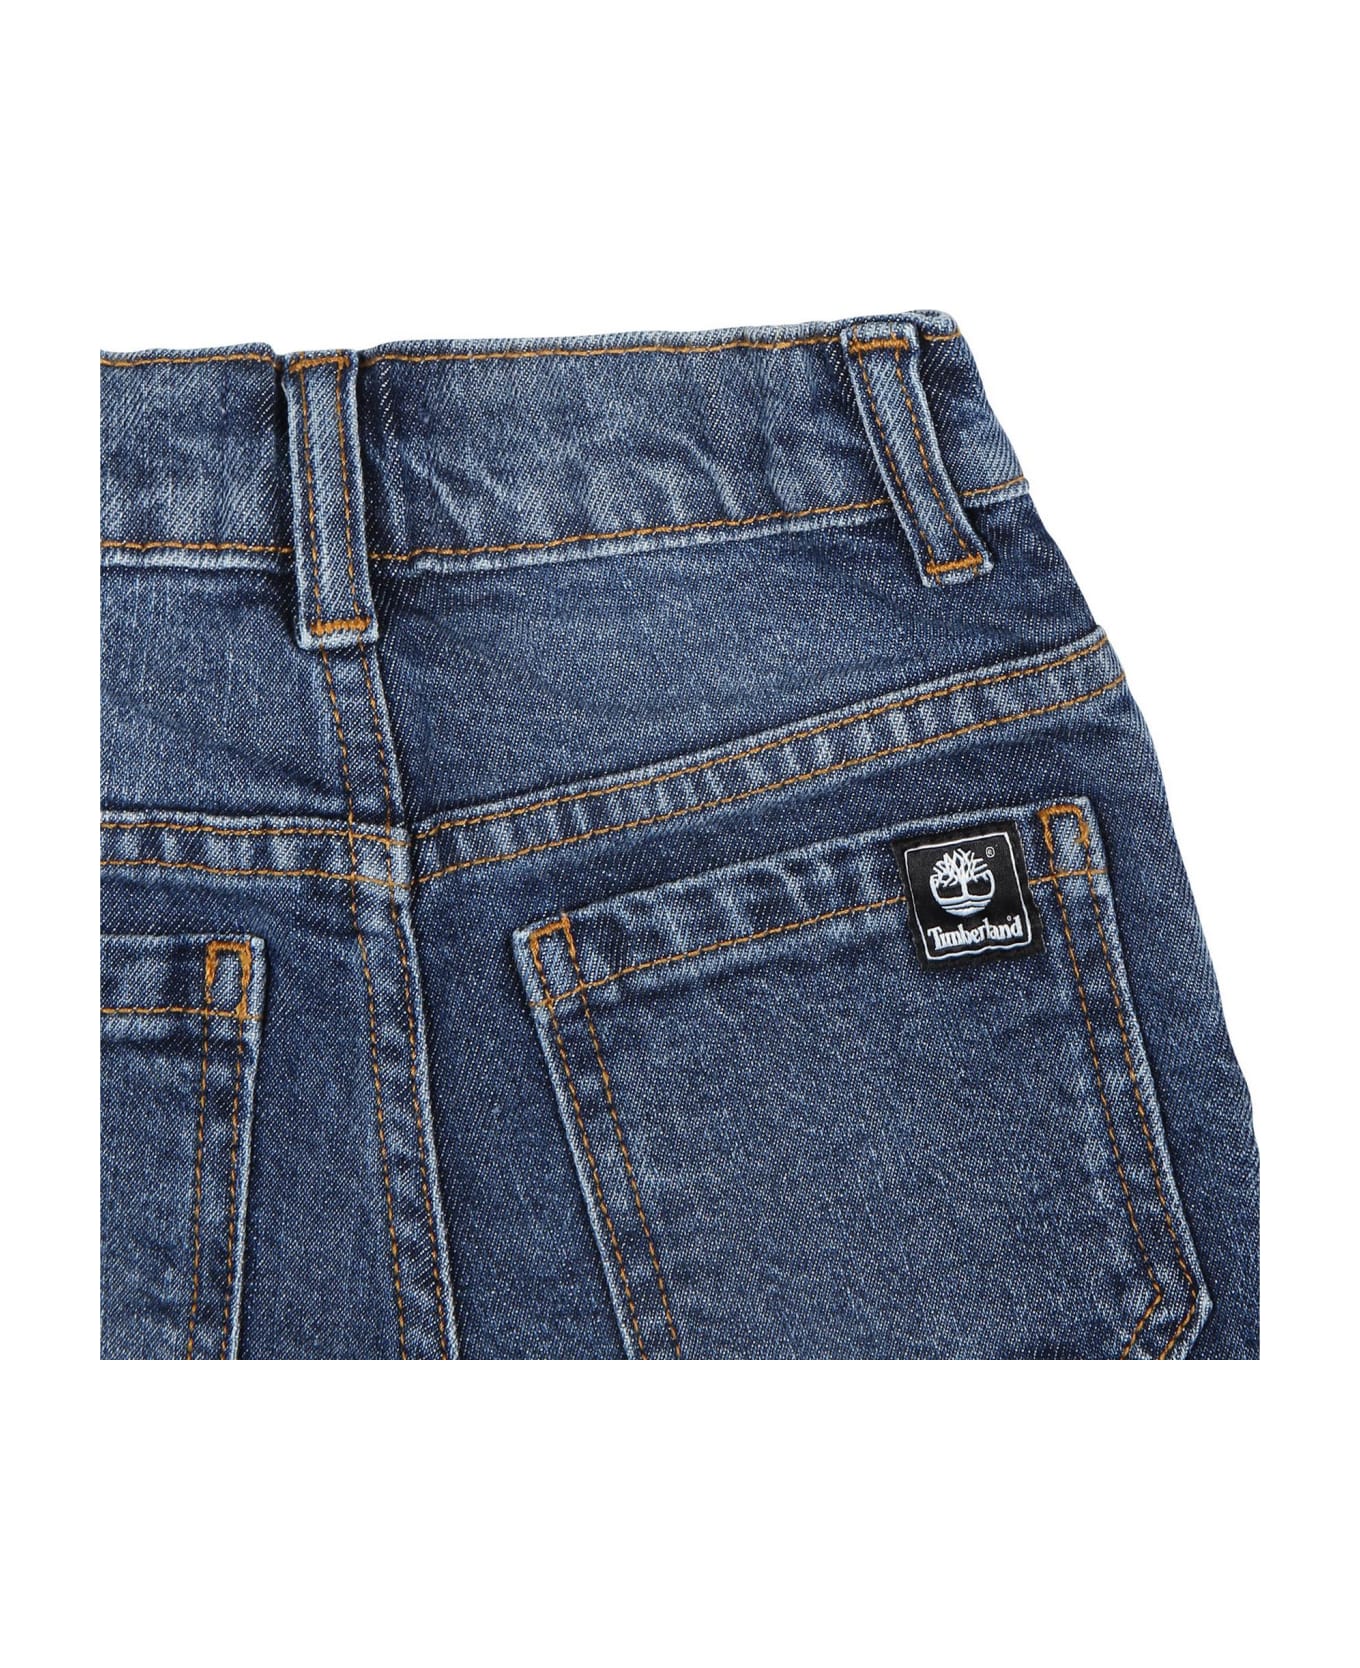 Timberland Denim Jeans For Baby Boy With Logo - Denim ボトムス